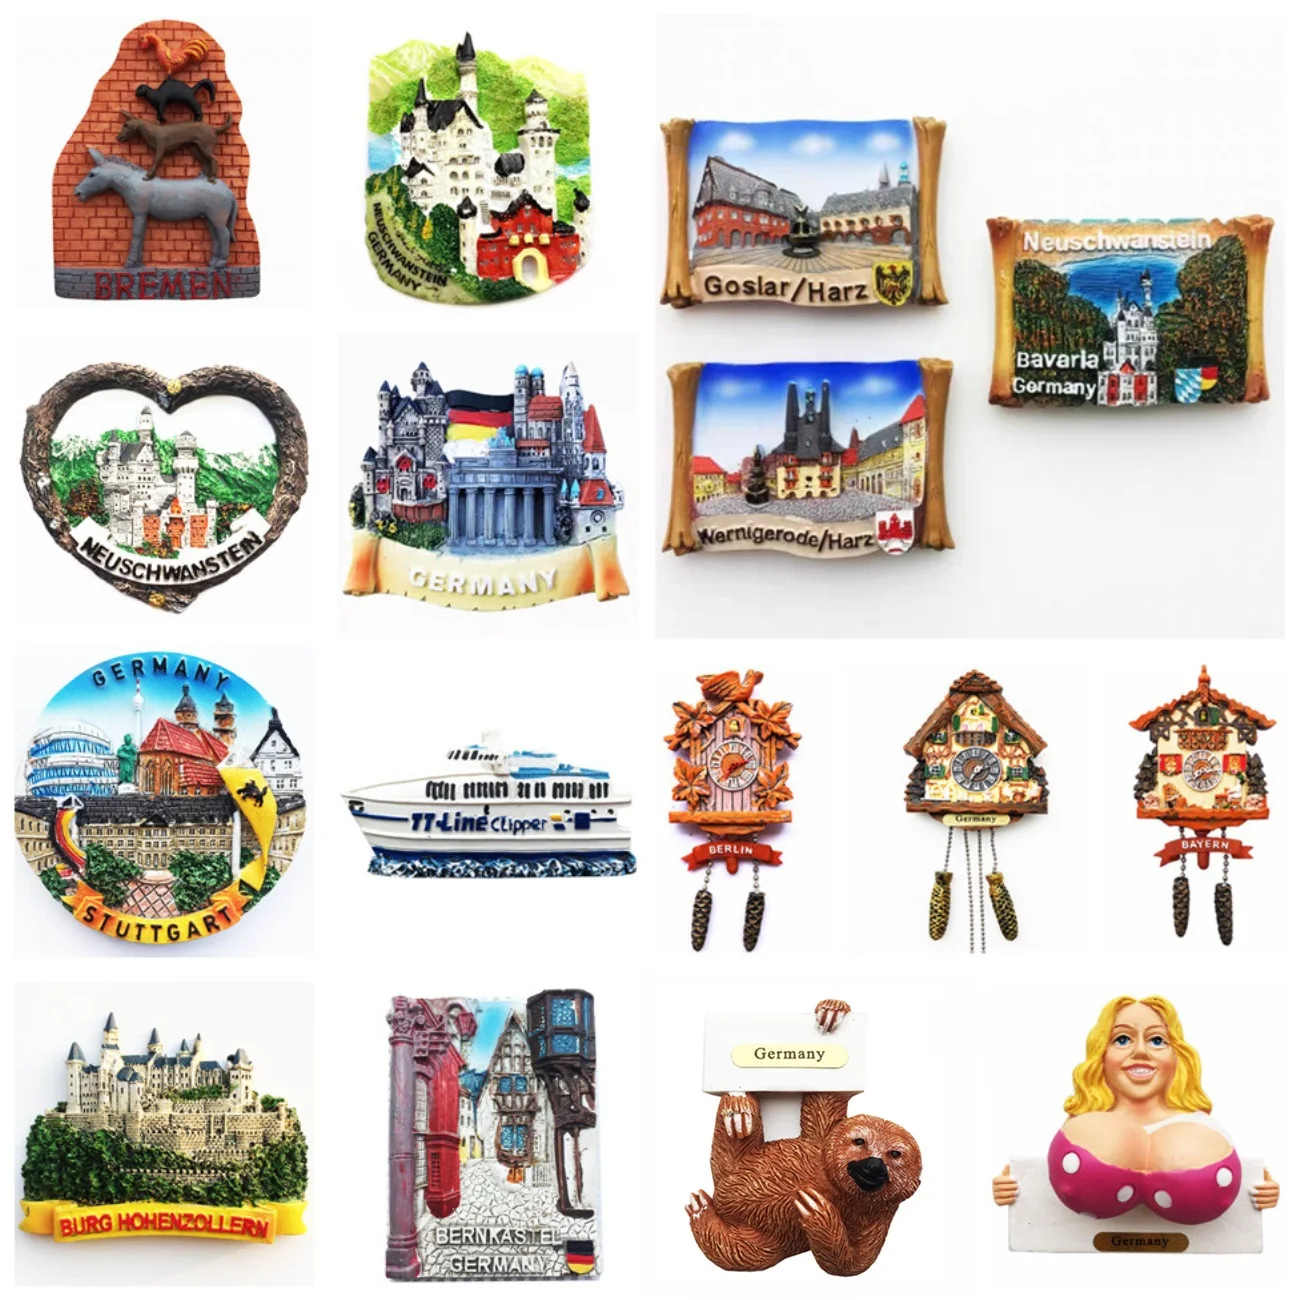 

Germany Neuschwanstein Goslar Harz Bavarla Fridge Magnets Tourist Souvenirs Refrigerator magnet Decoration Articles Handicraft